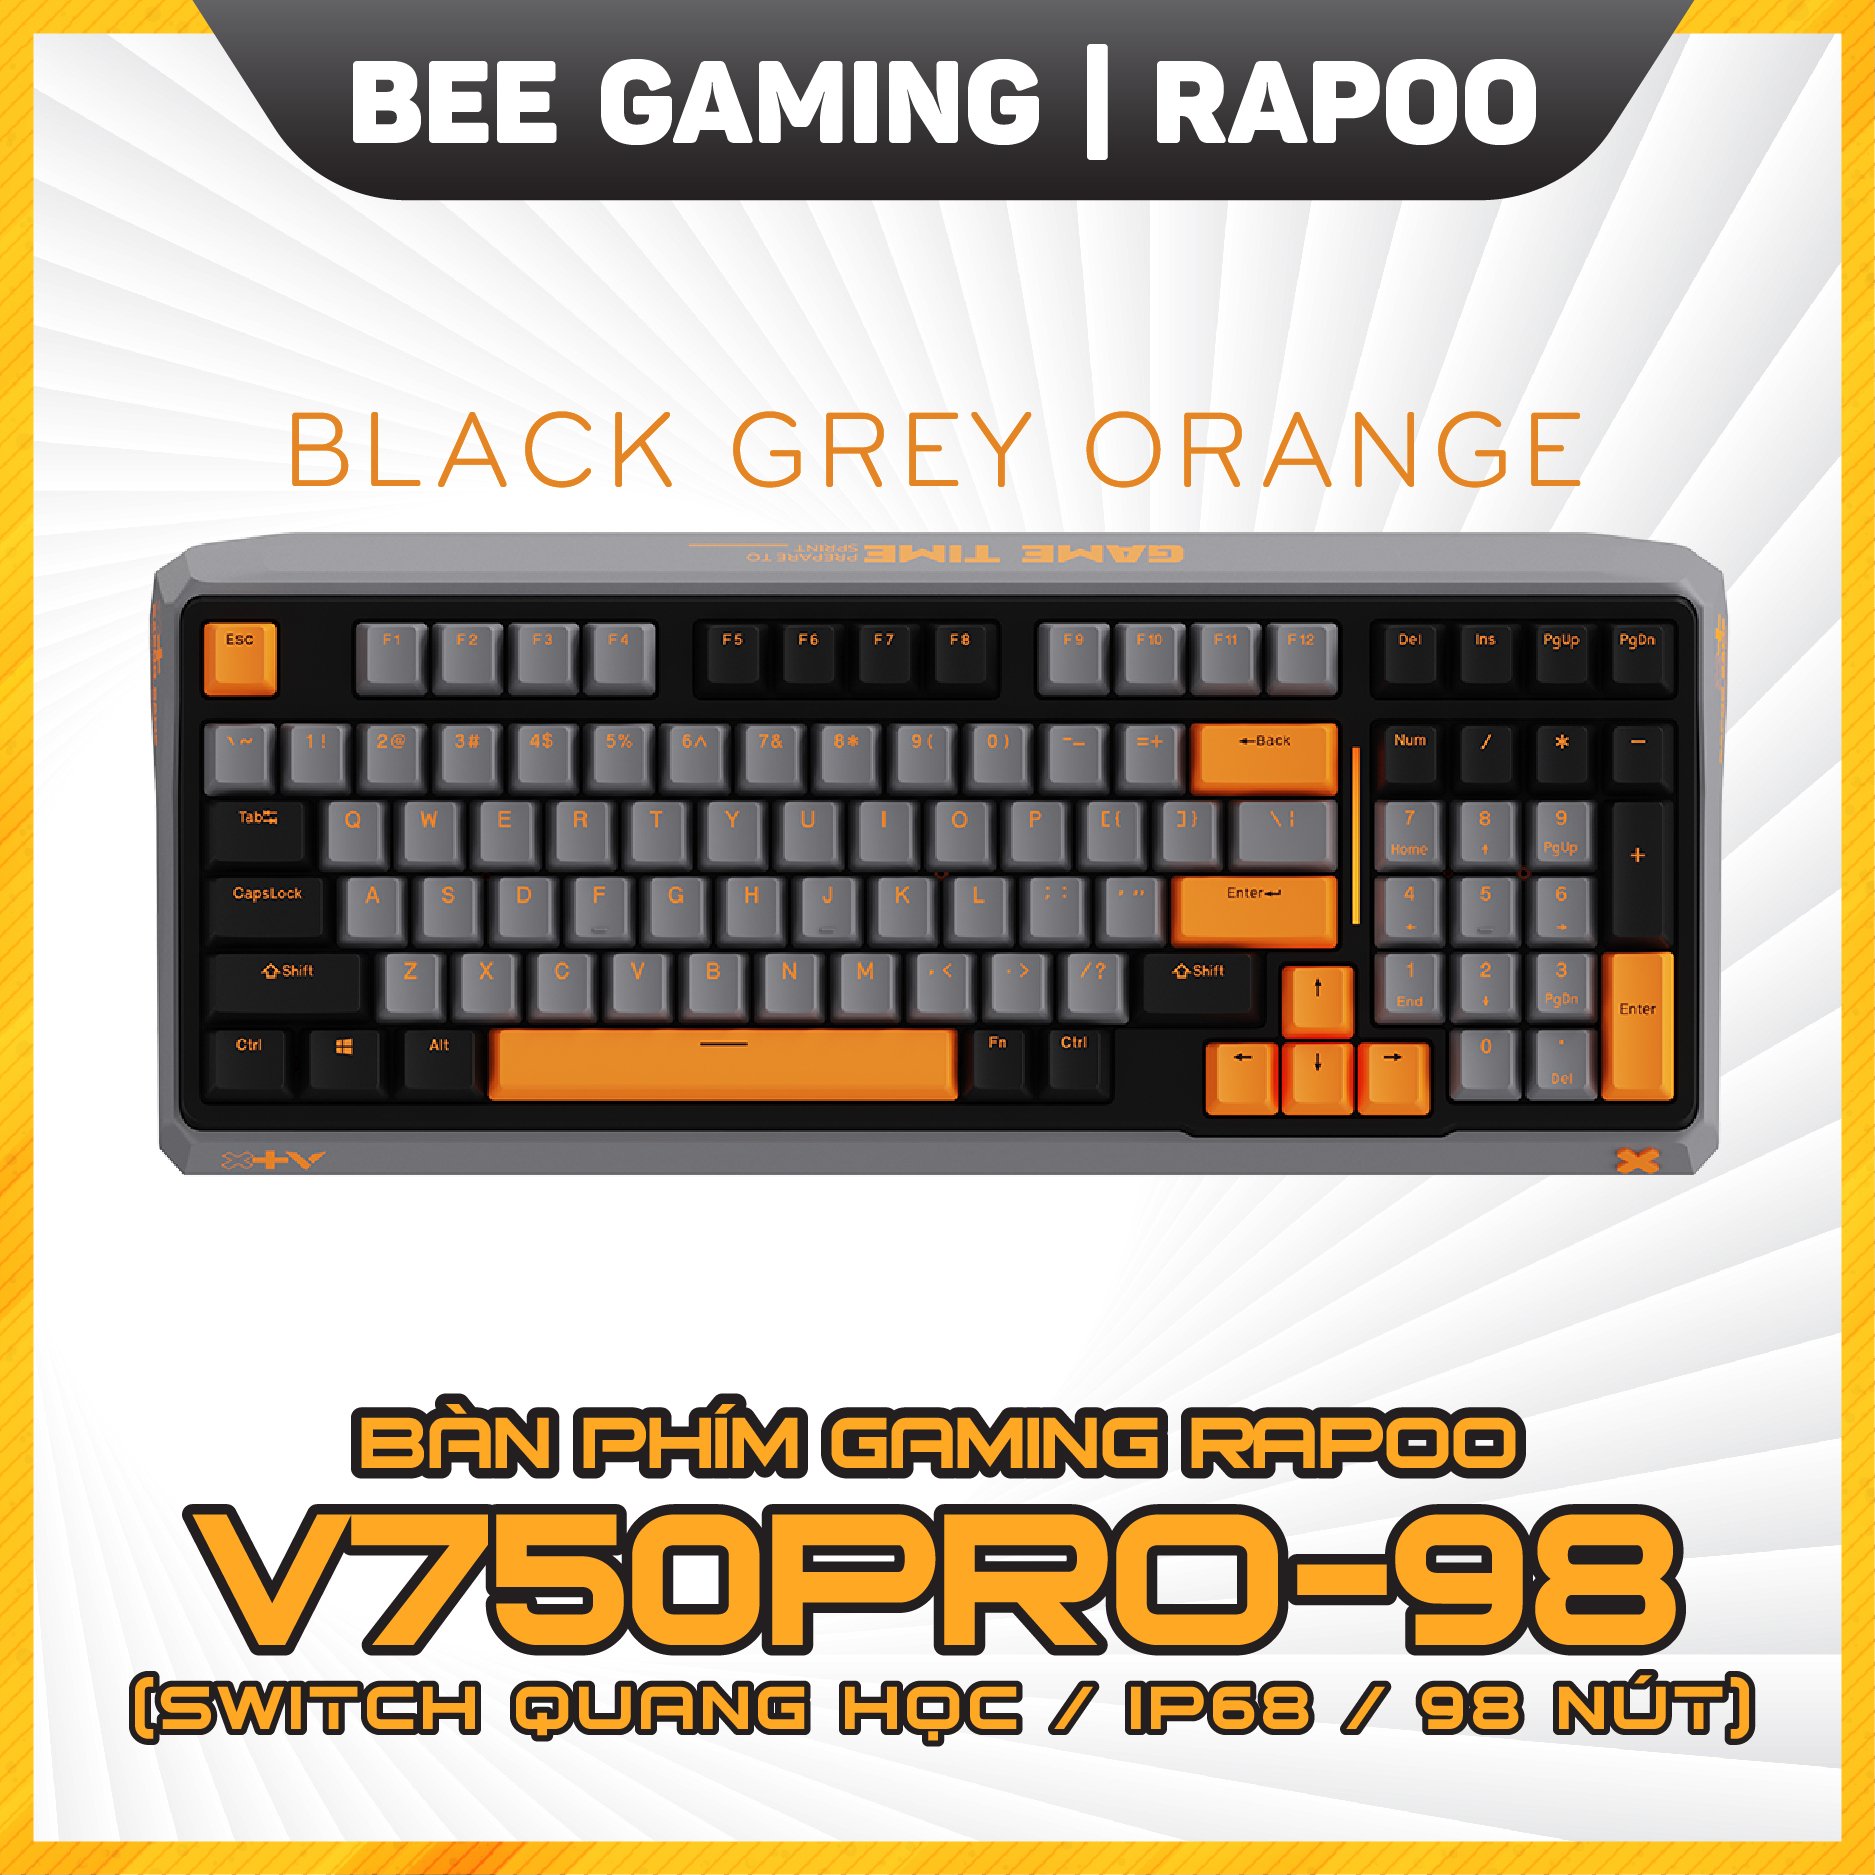 ban-phim-gaming-quang-co-rapoo-v750-pro-black-grey-orange-beegaming-1